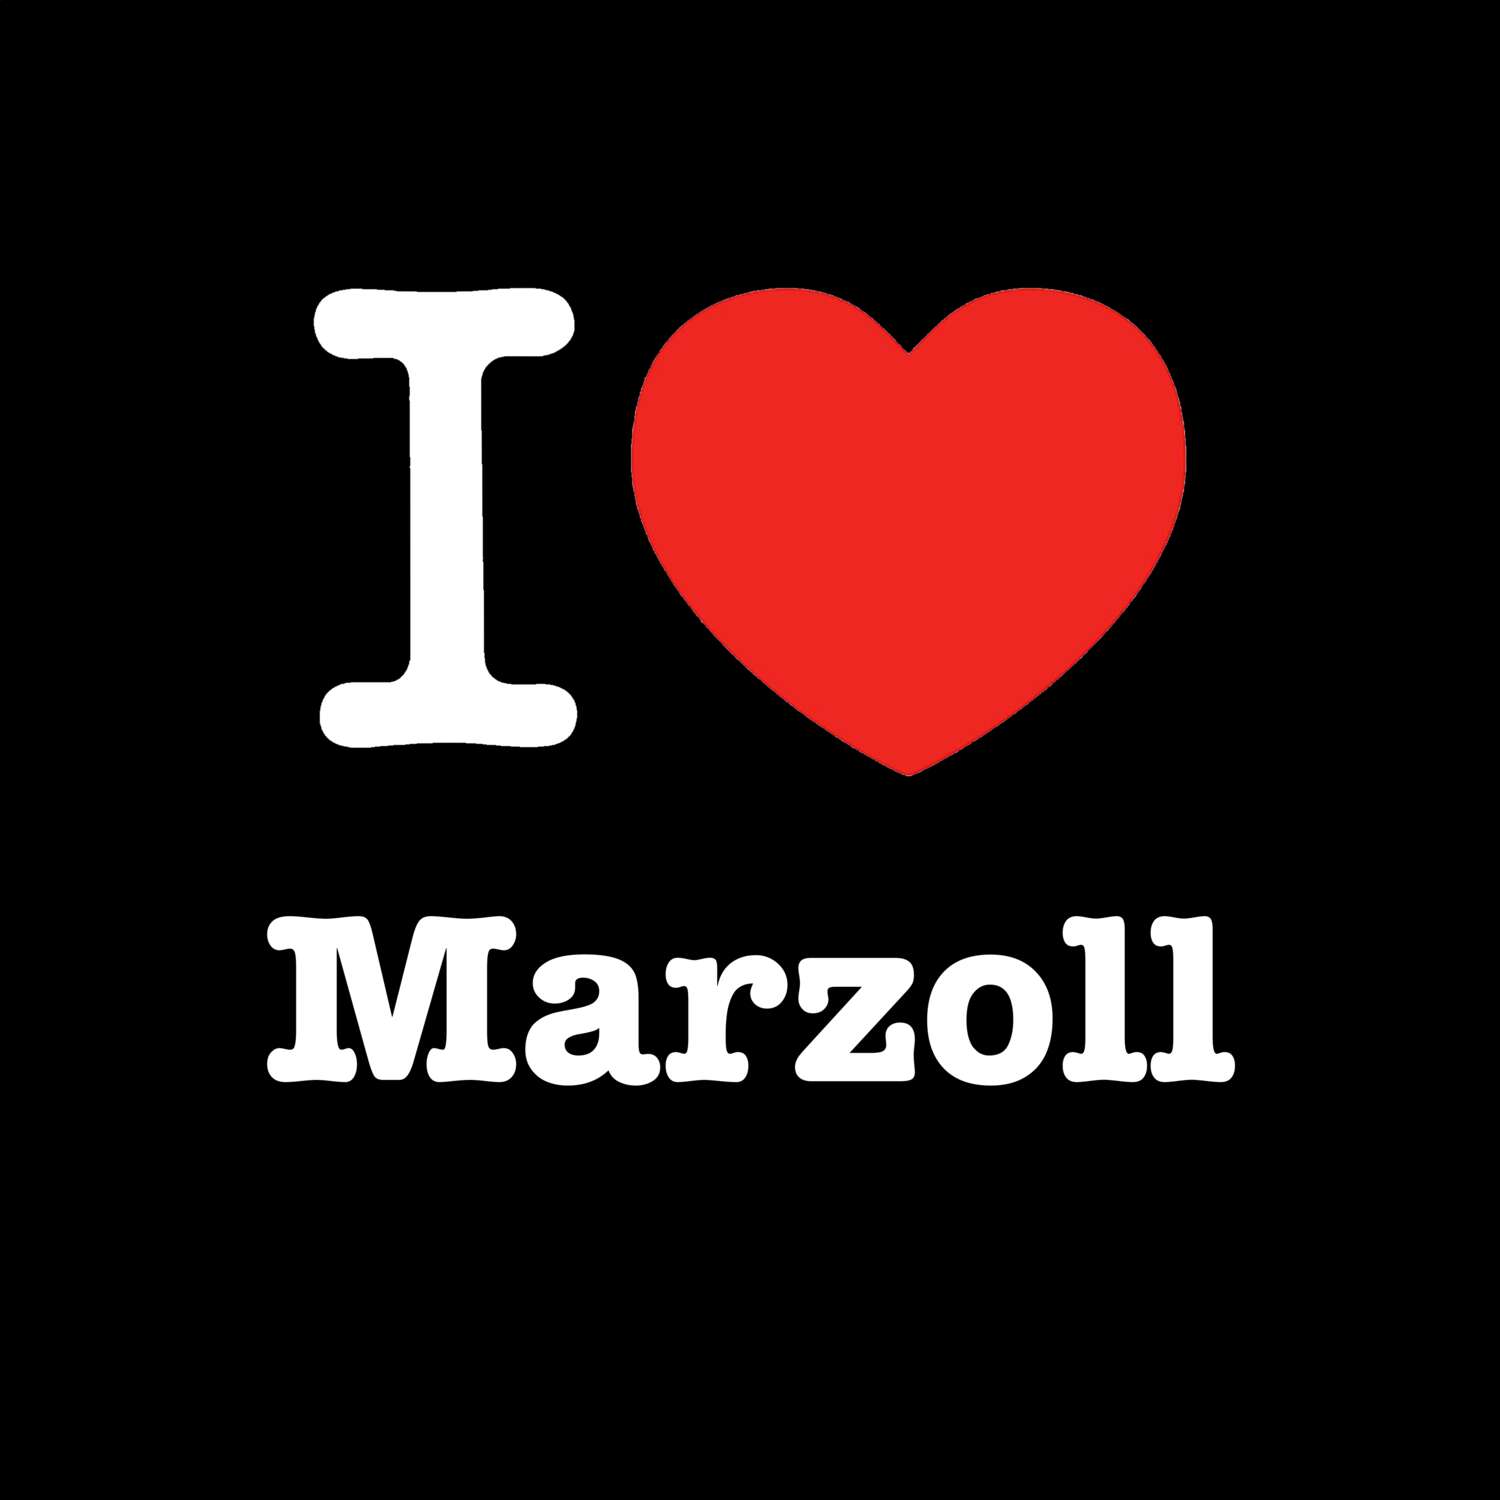 Marzoll T-Shirt »I love«